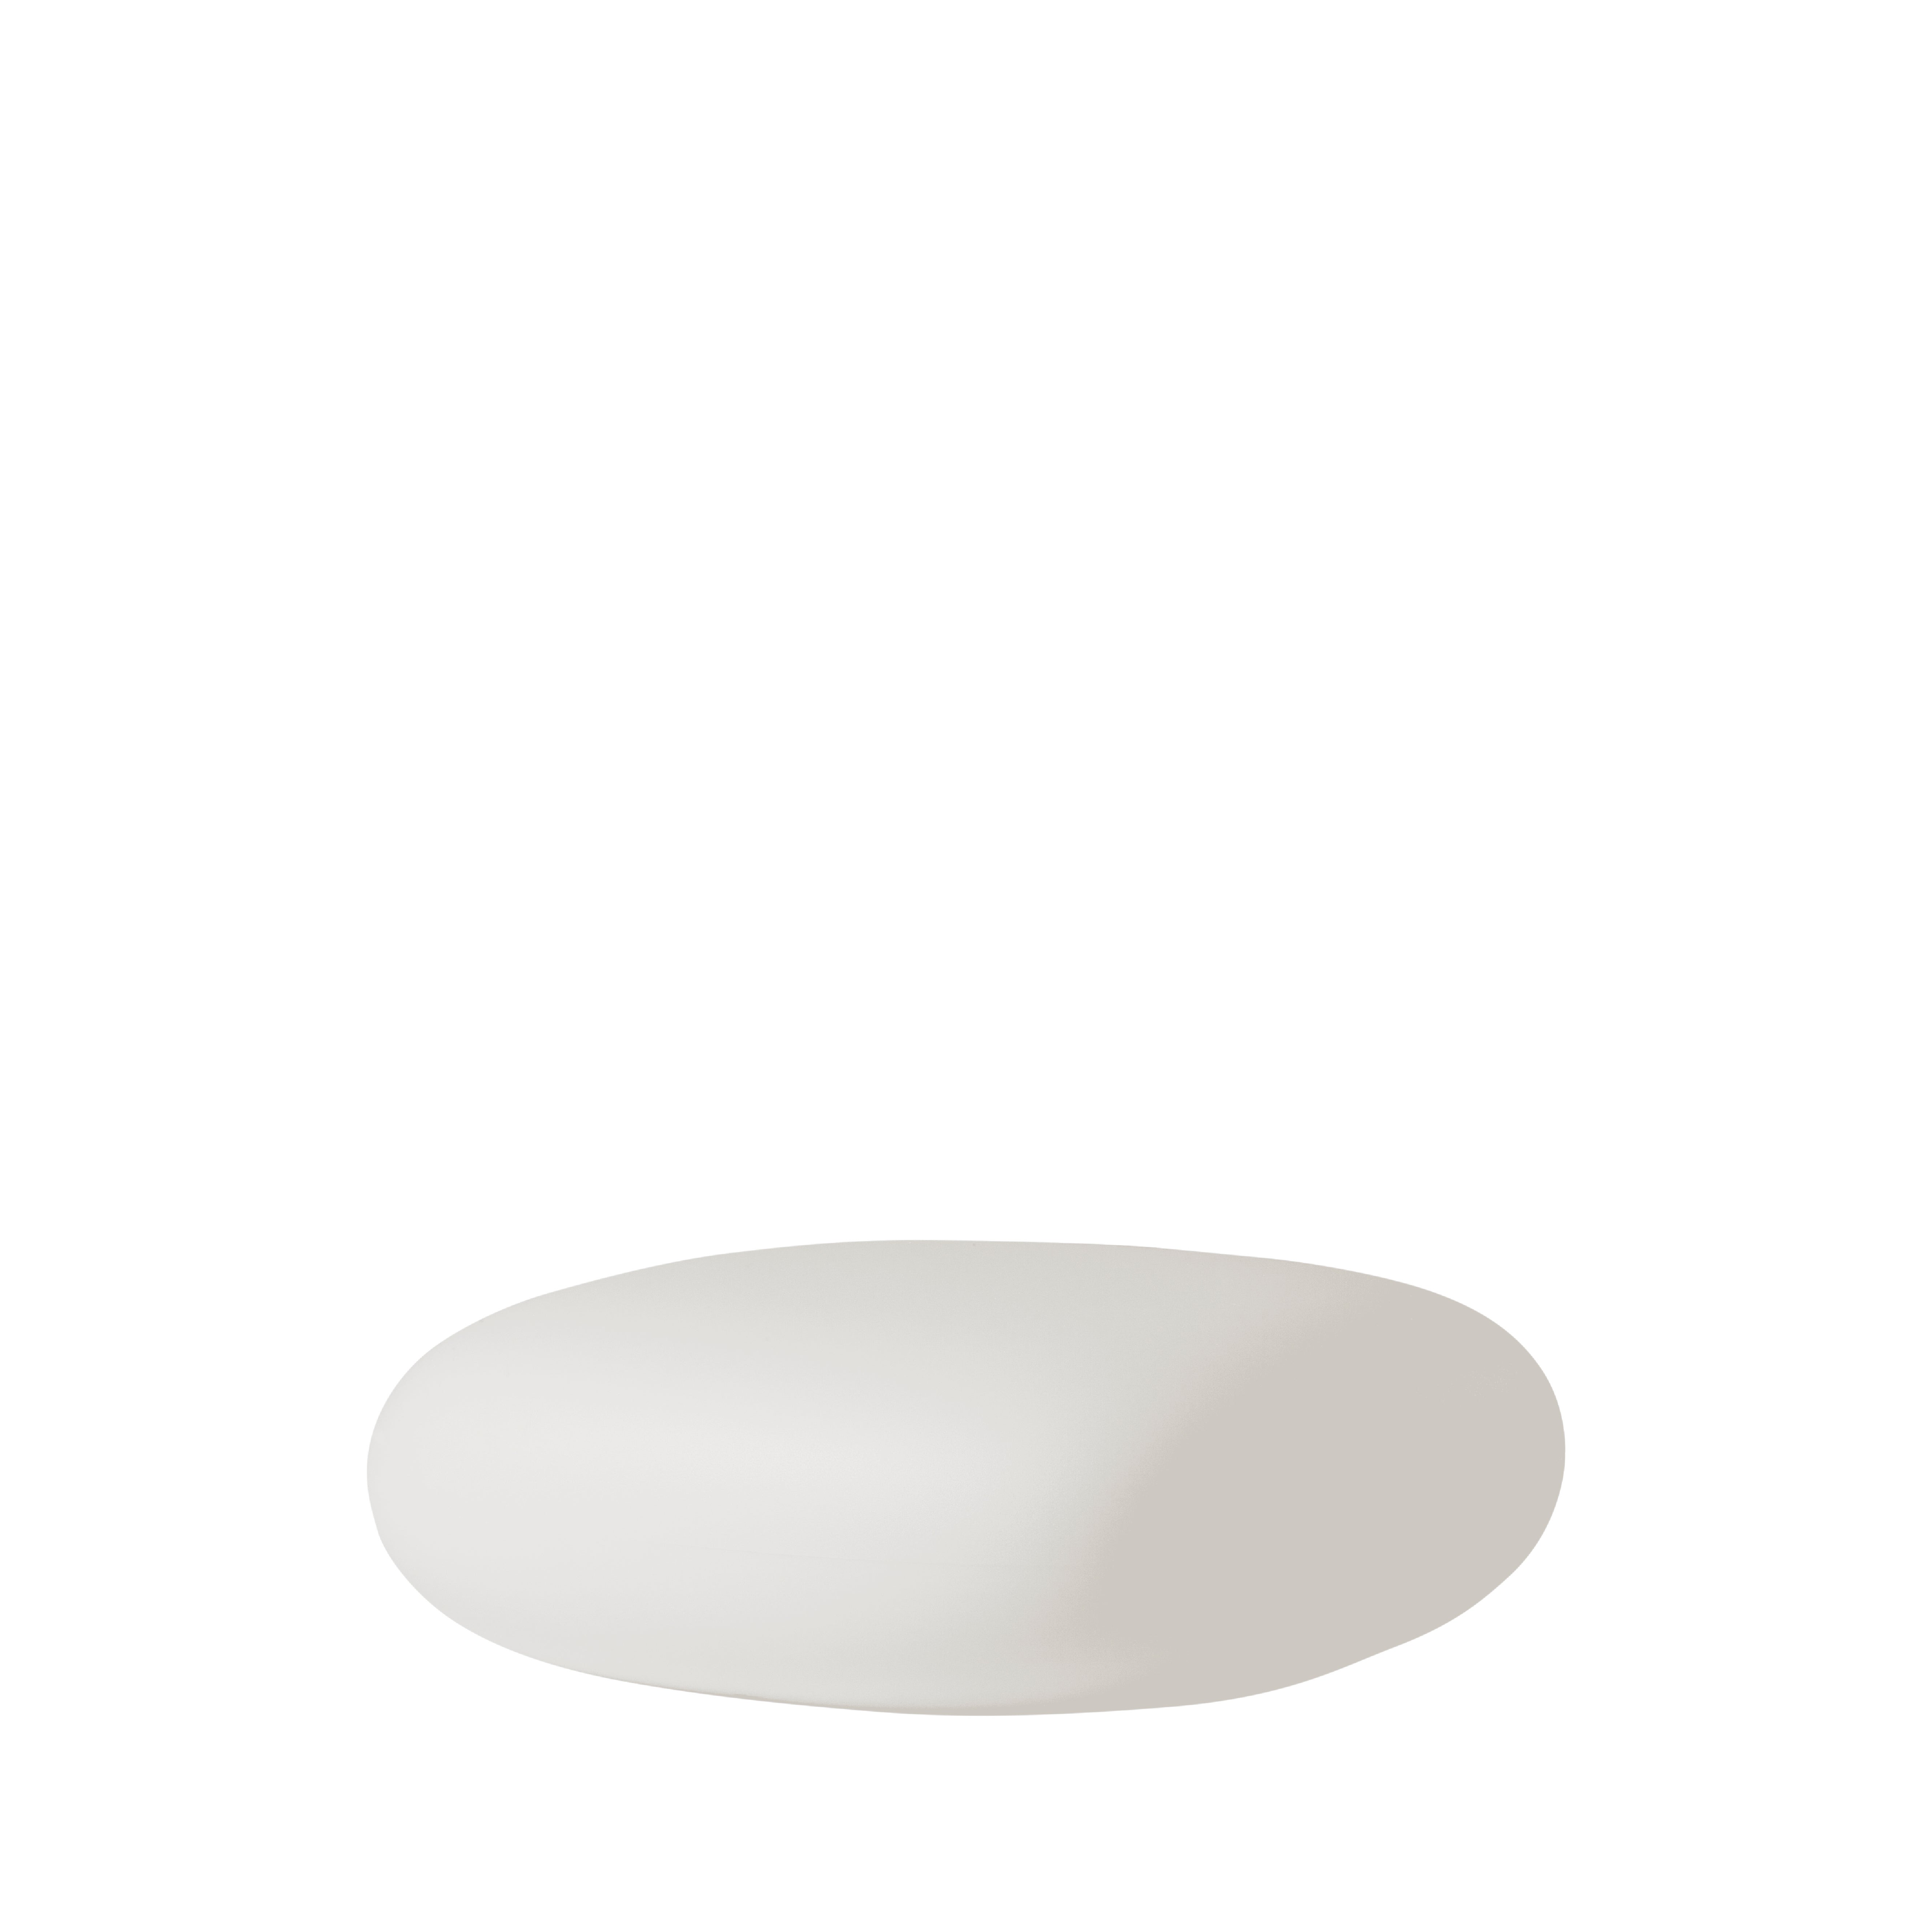 Slide Design Chubby Low Pouf in Milky White by Marcel Wanders For Sale